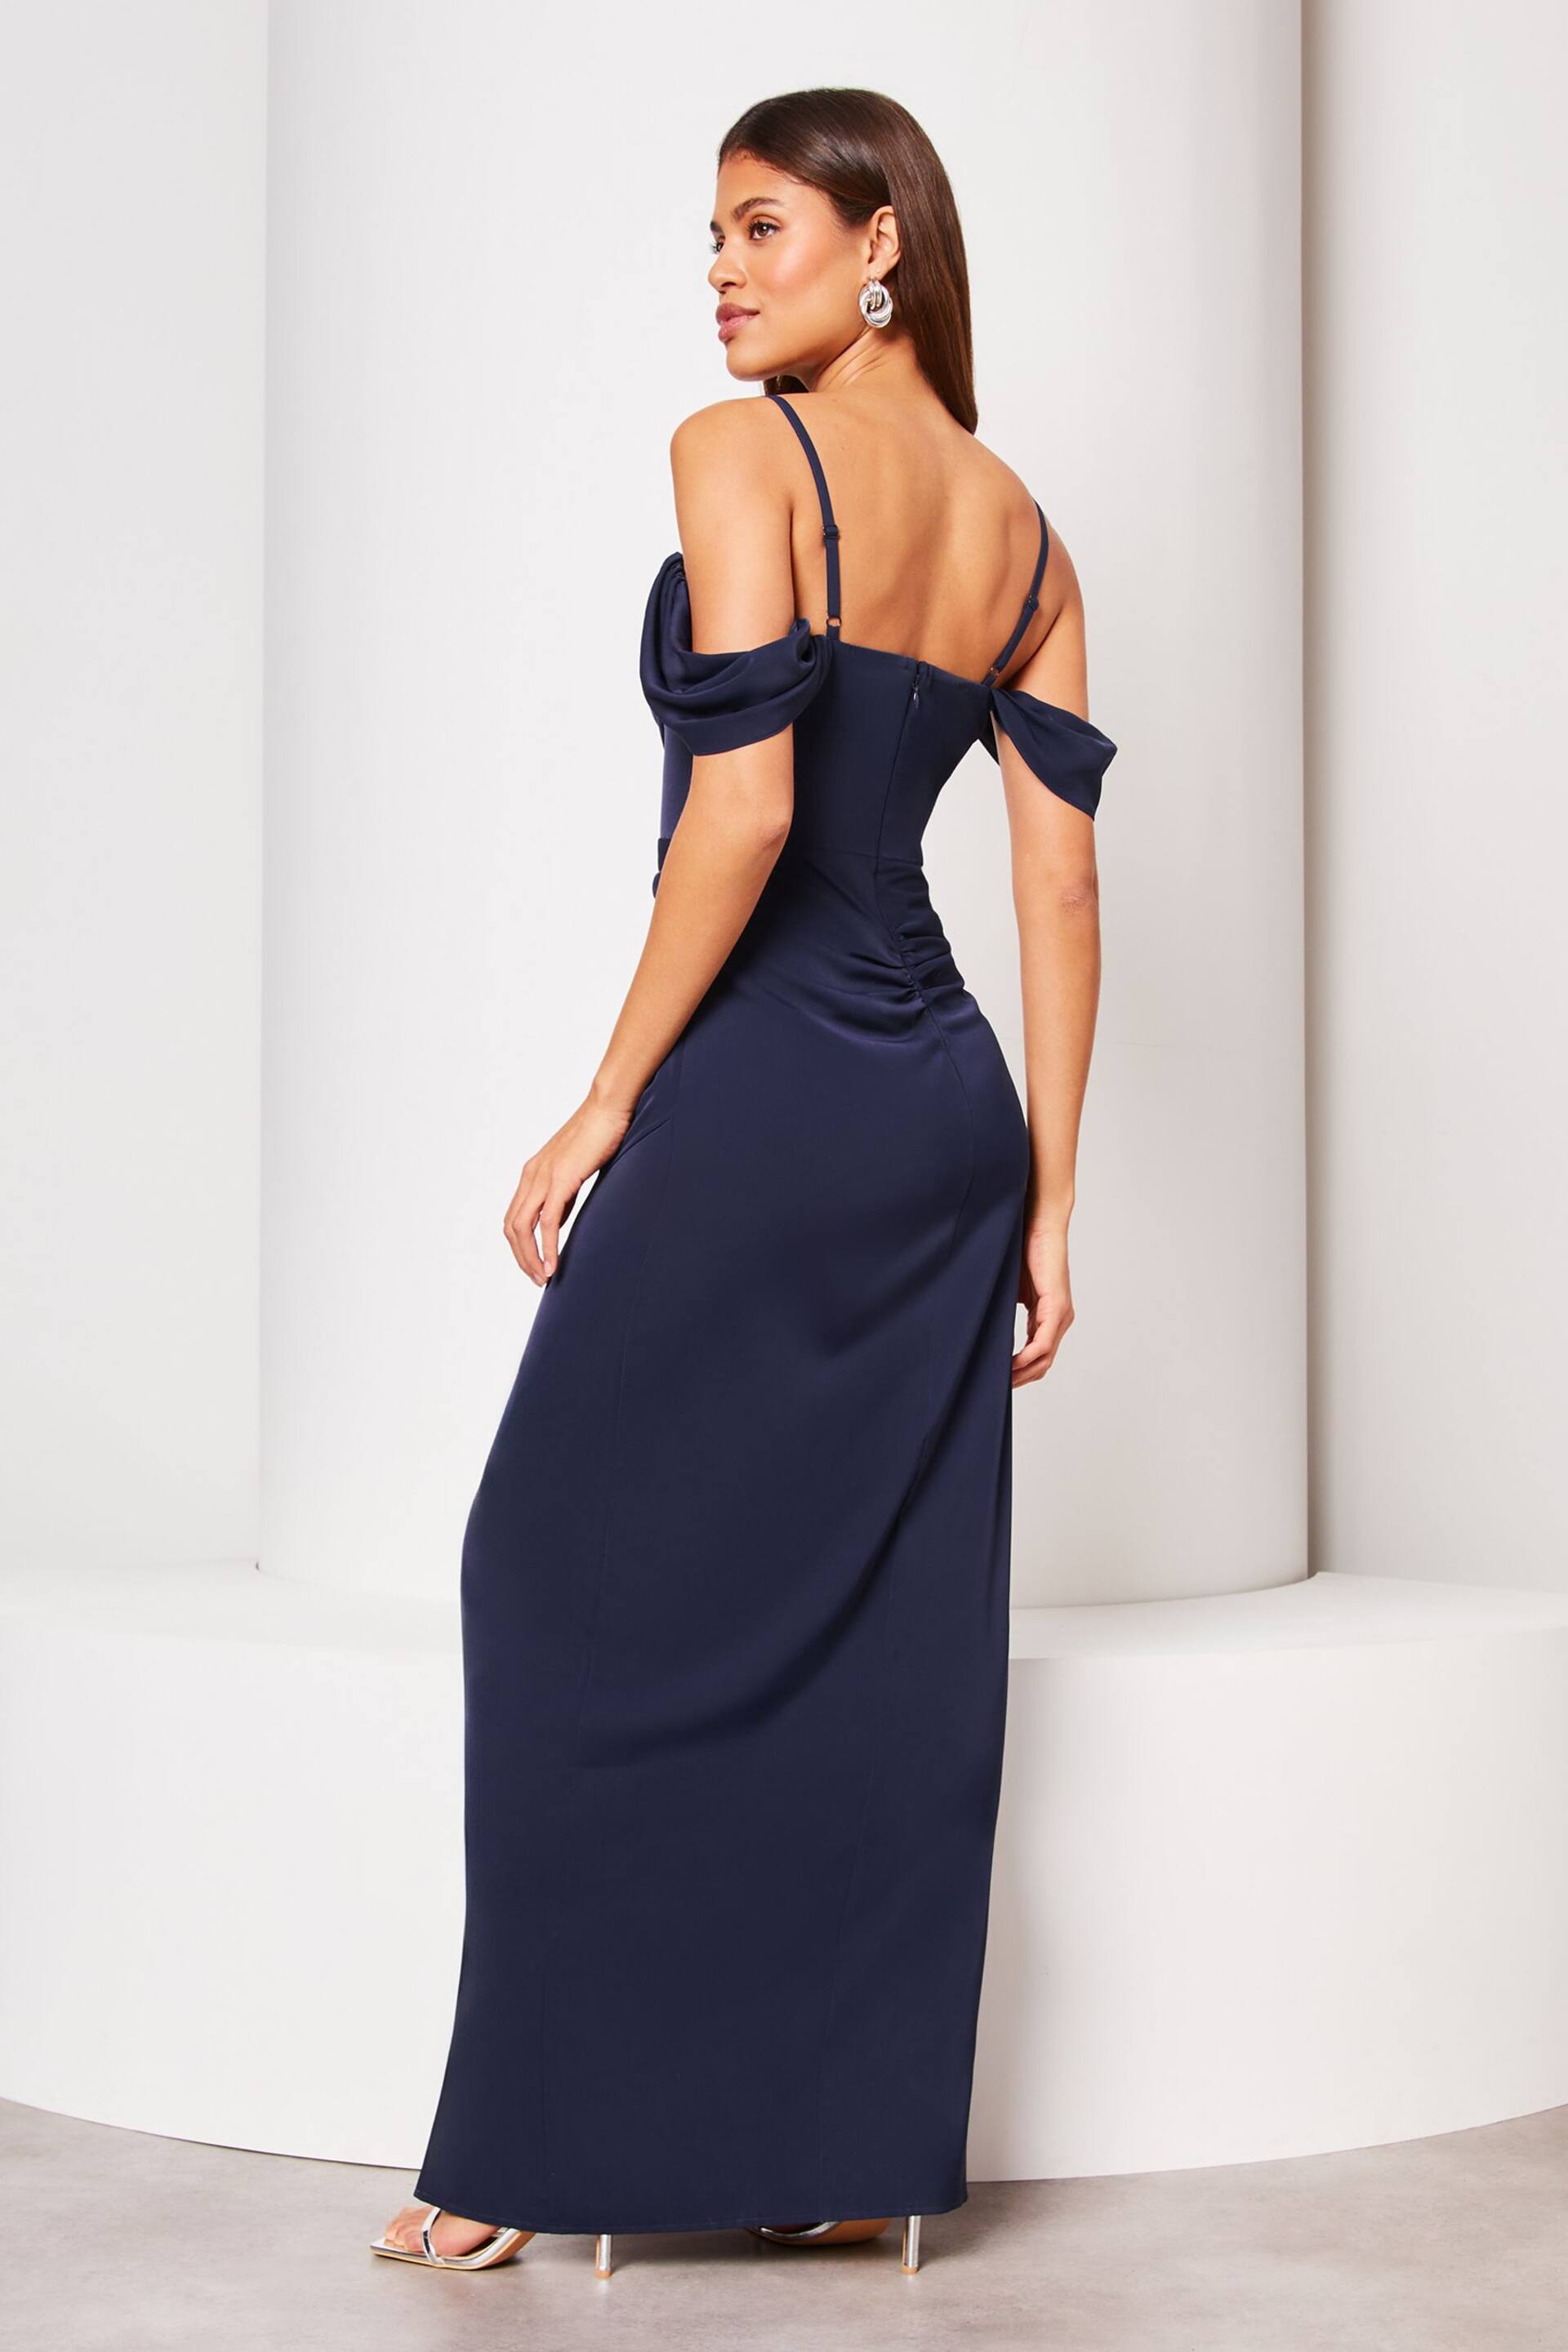 Lipsy Navy Blue Tall Cowl Lace Cami Drape Maxi Dress - Image 2 of 4